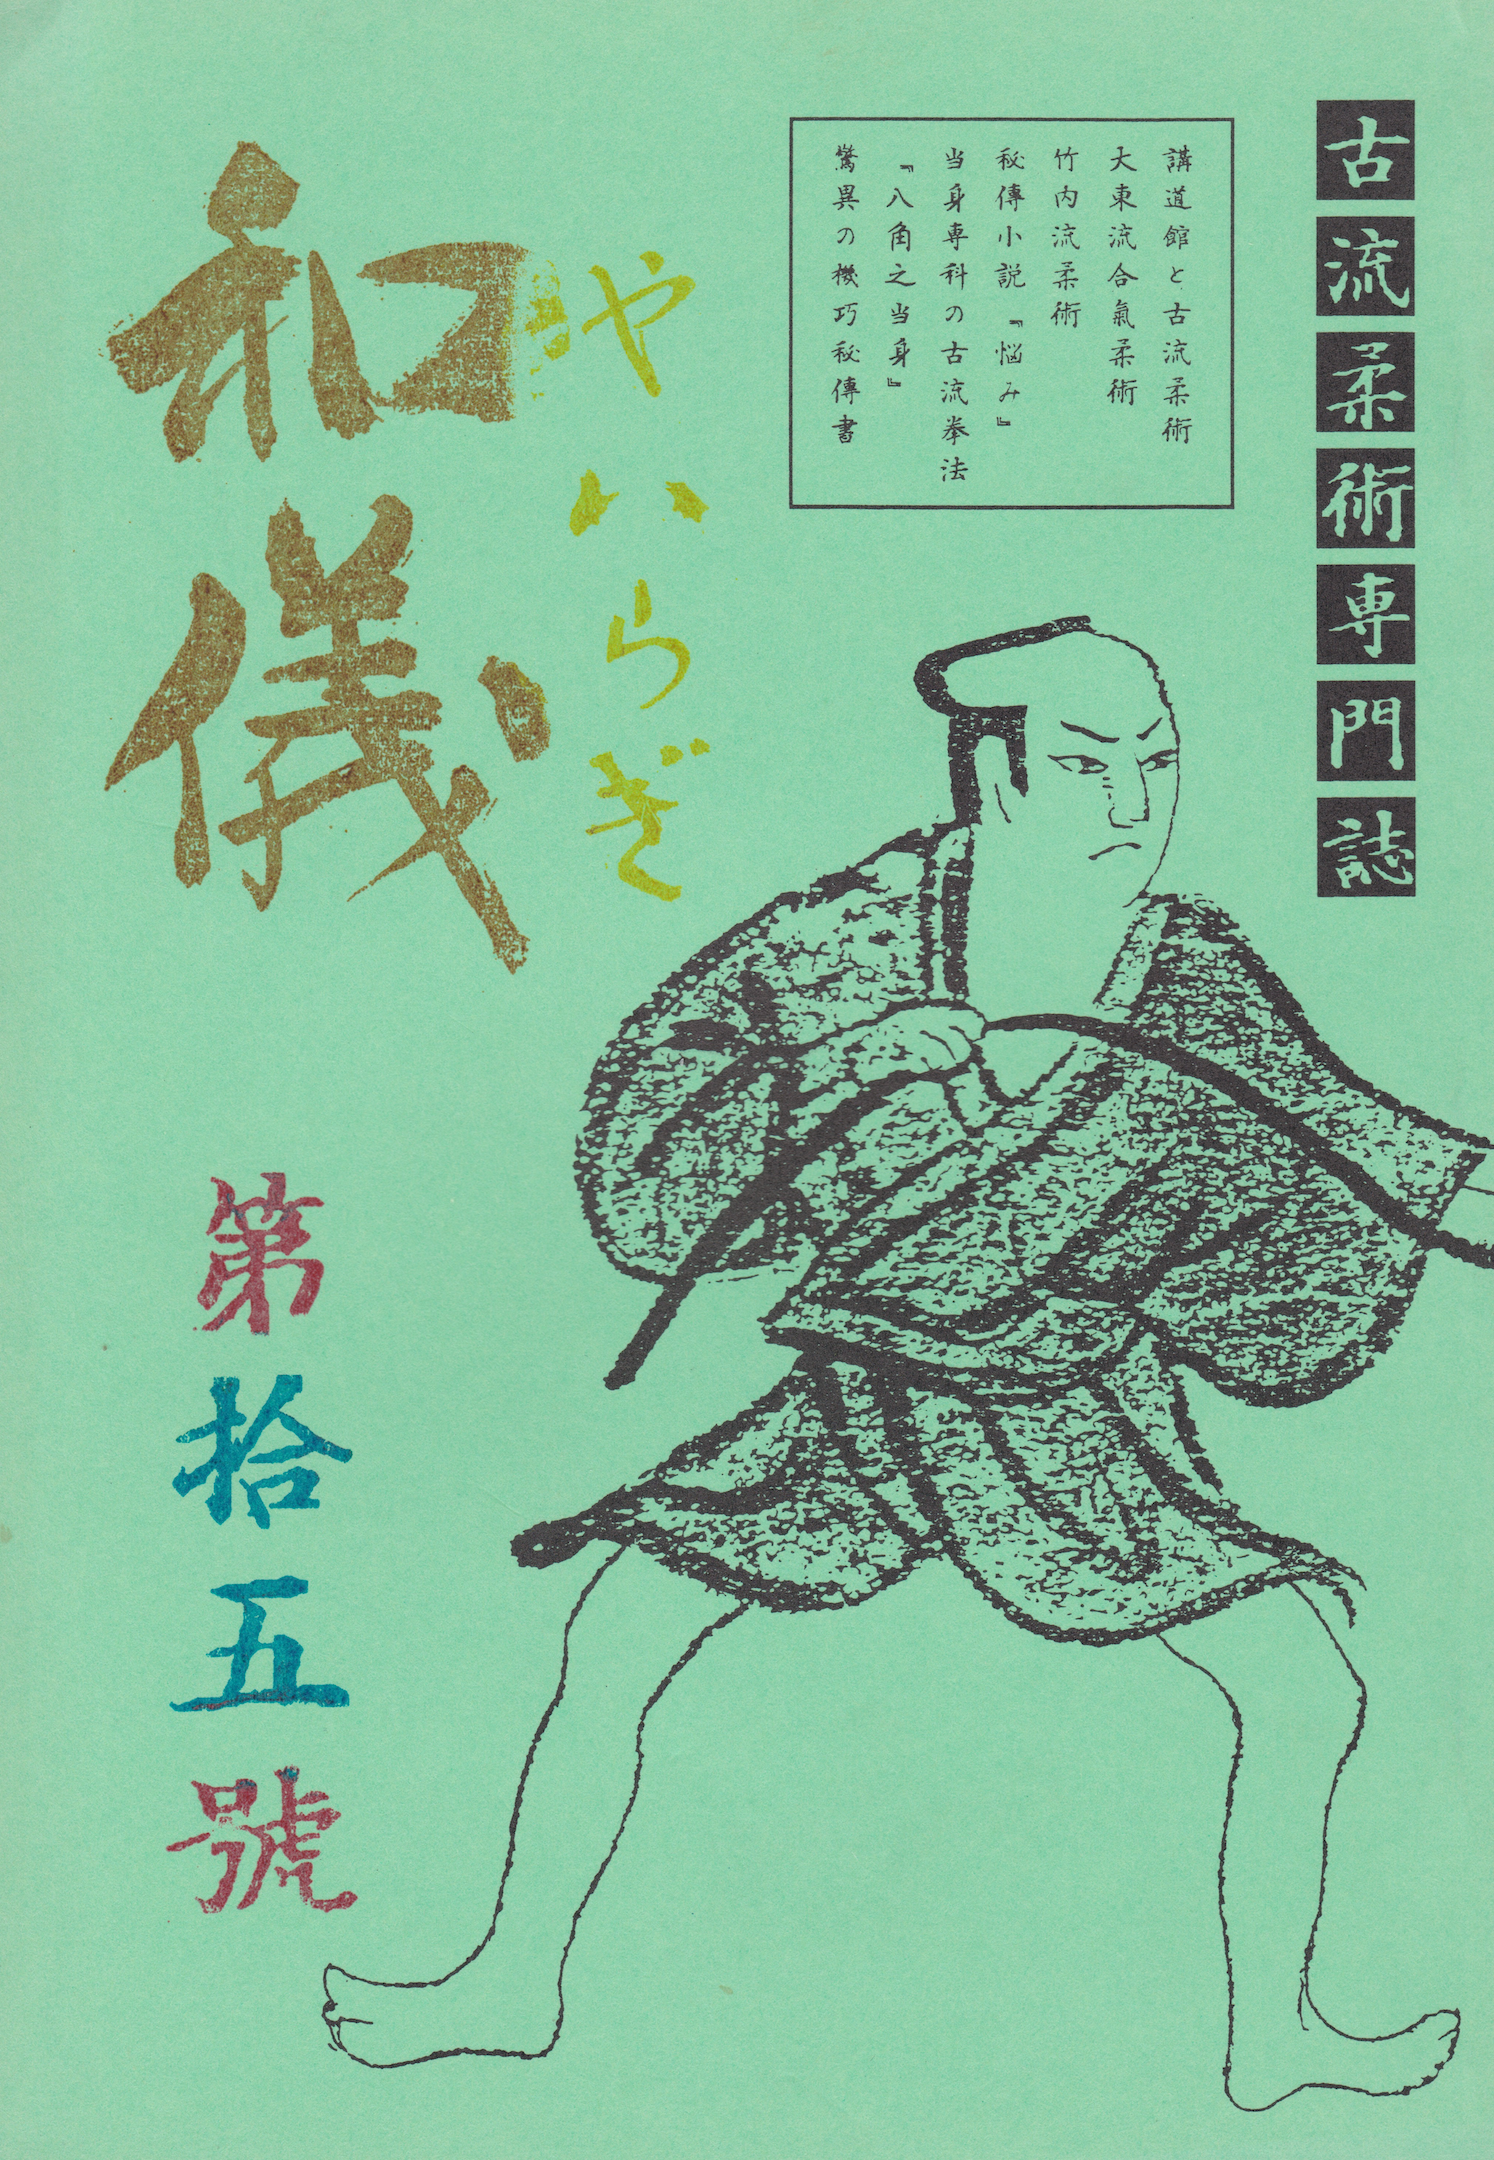 Yairagi Koryu Jujutsu Research Journal #15 (Preowned)